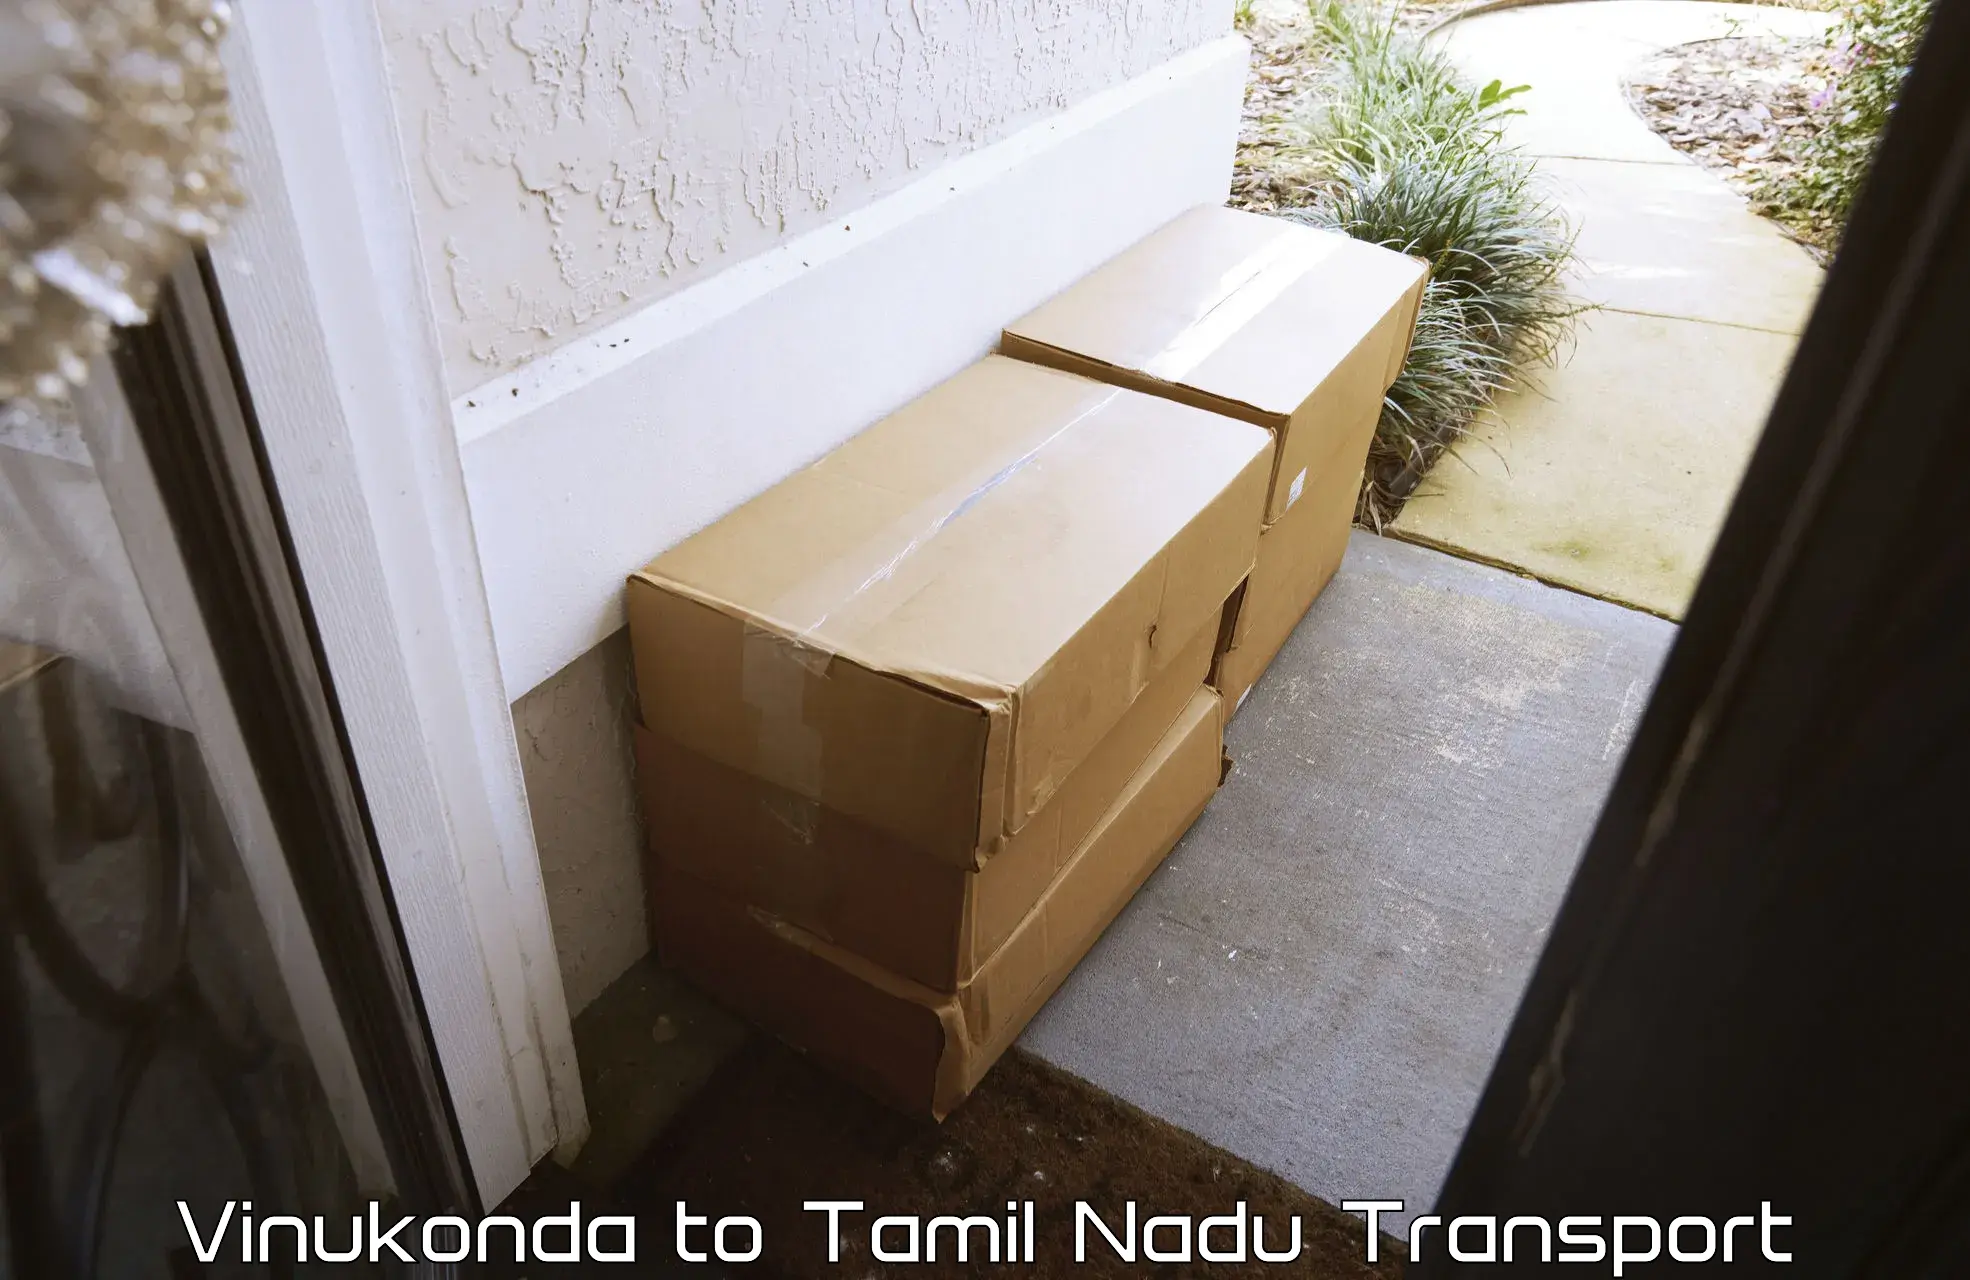 Container transport service Vinukonda to Anthiyur